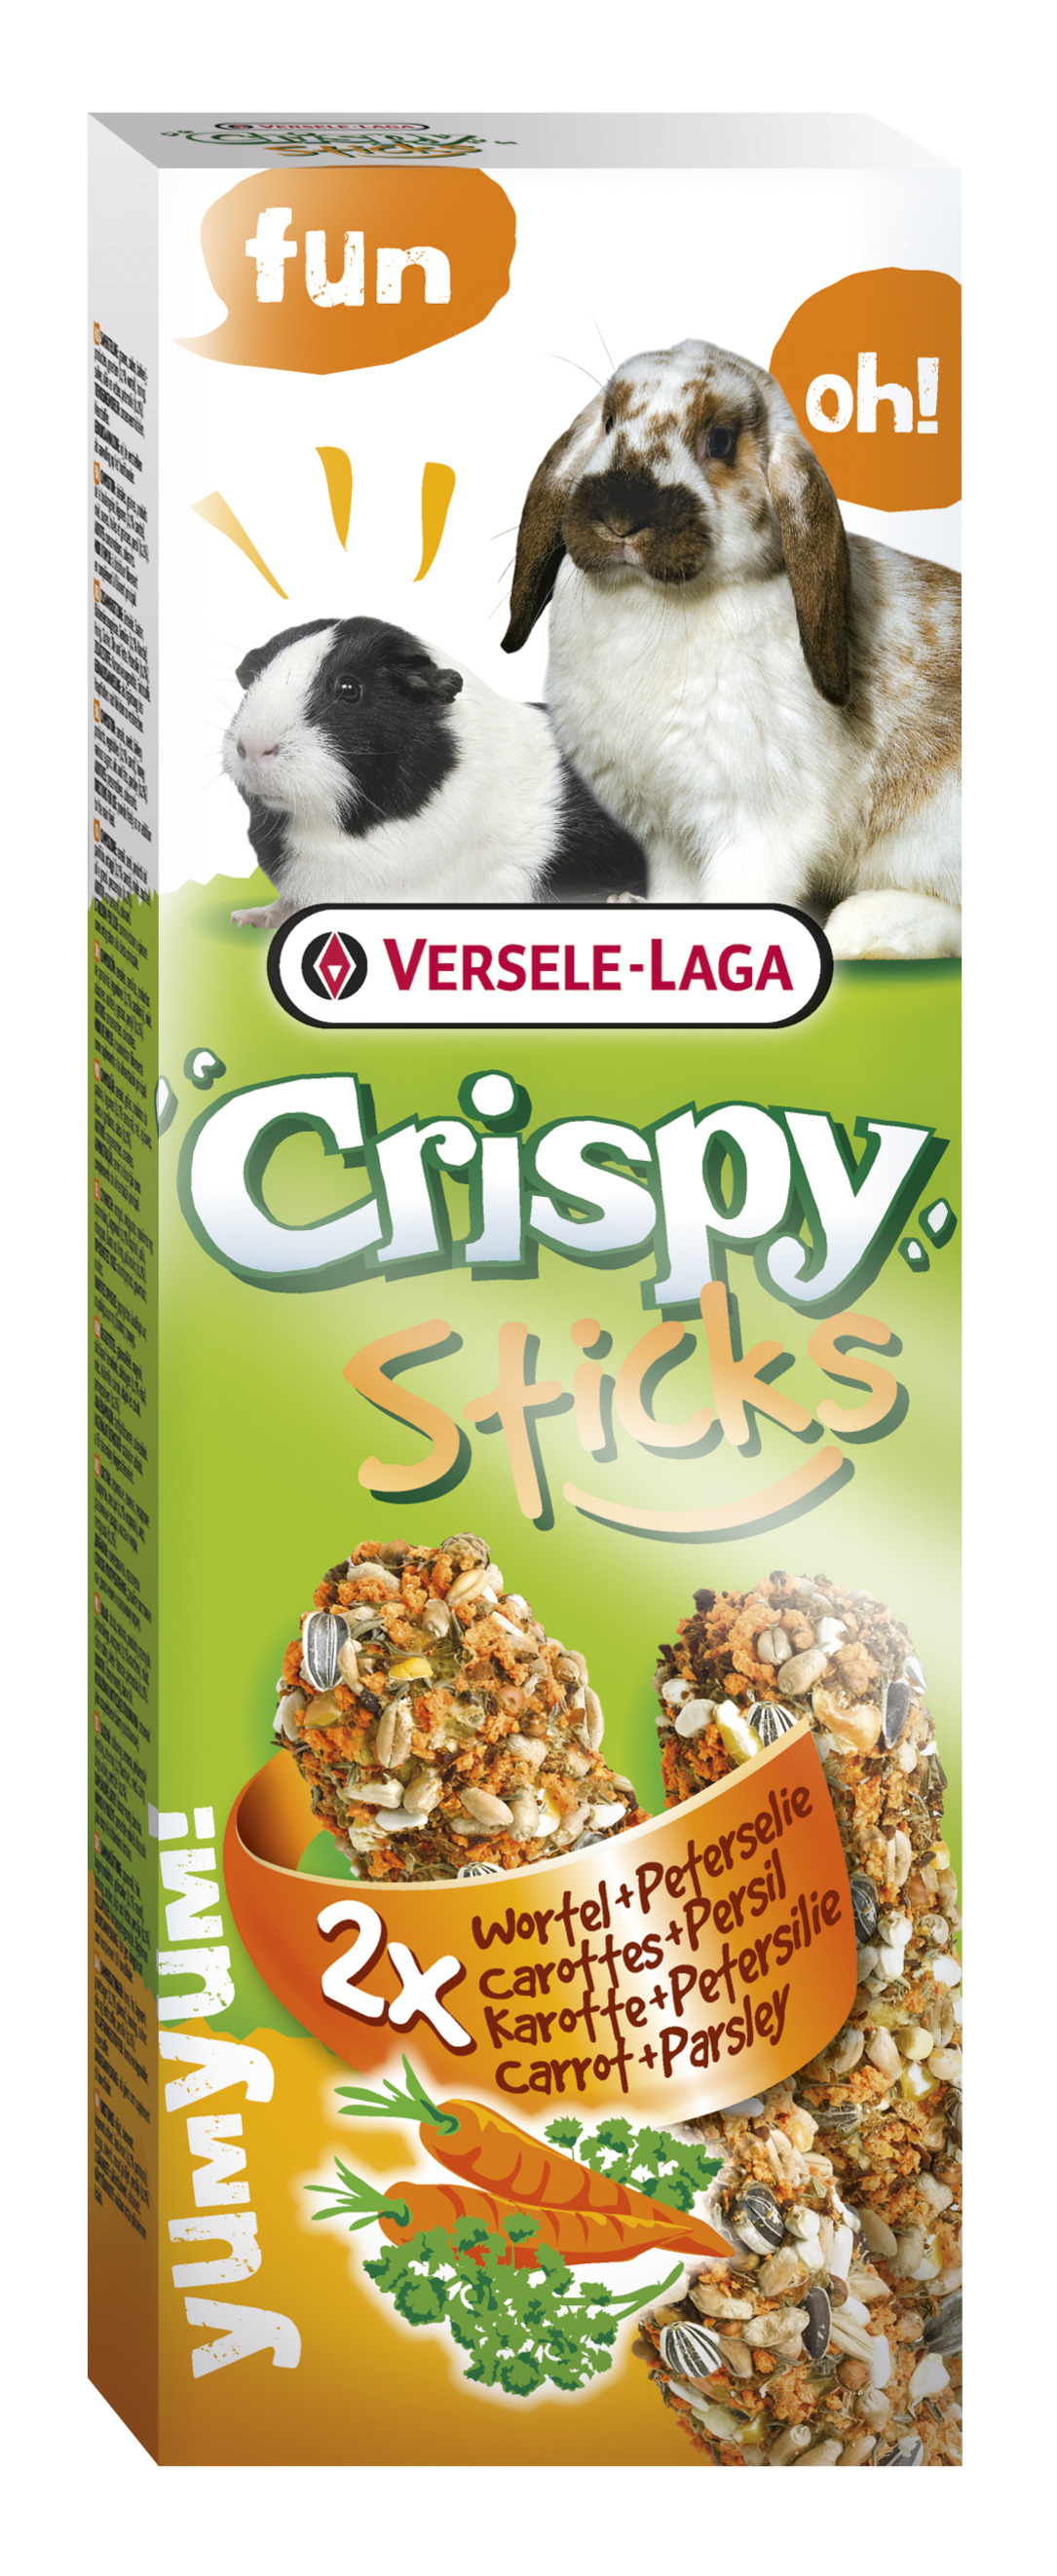 Crispy Sticks Karotte und Petersilie, 2x55g